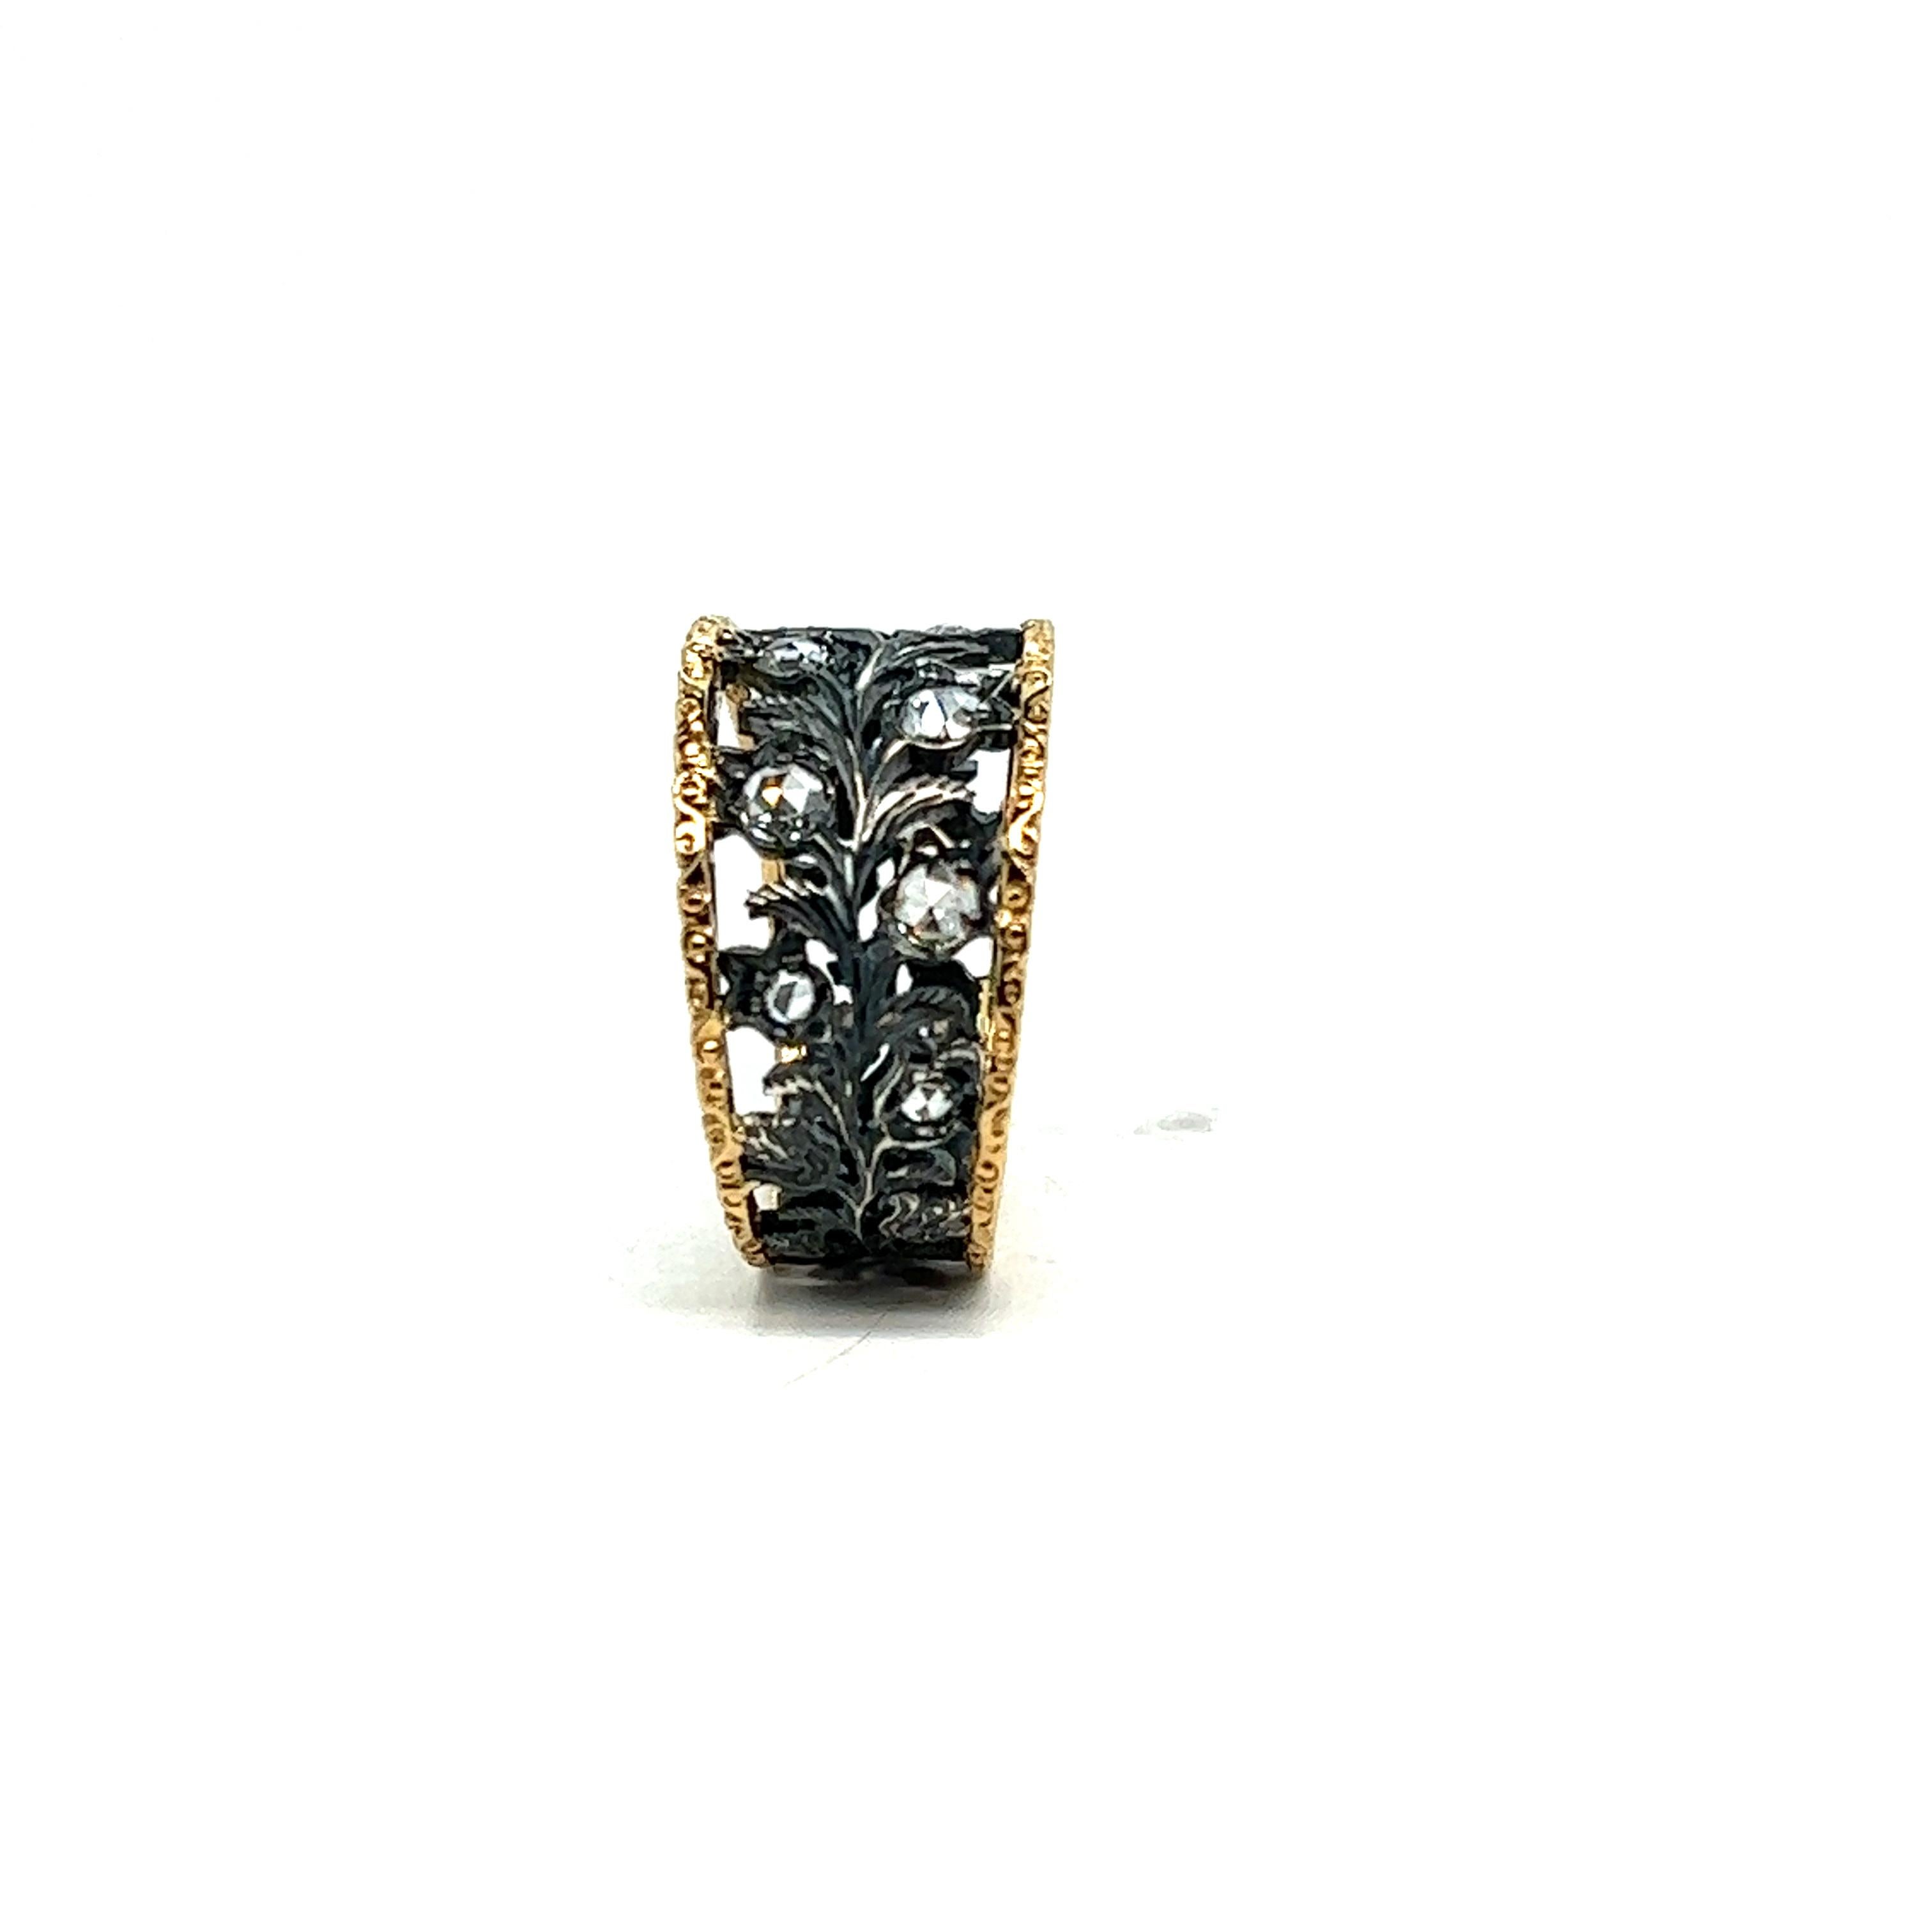 Rose Cut Yellow Gold Baroque Ring, Silver, 10 Pink Diamonds, Antique Cut, Flower Design